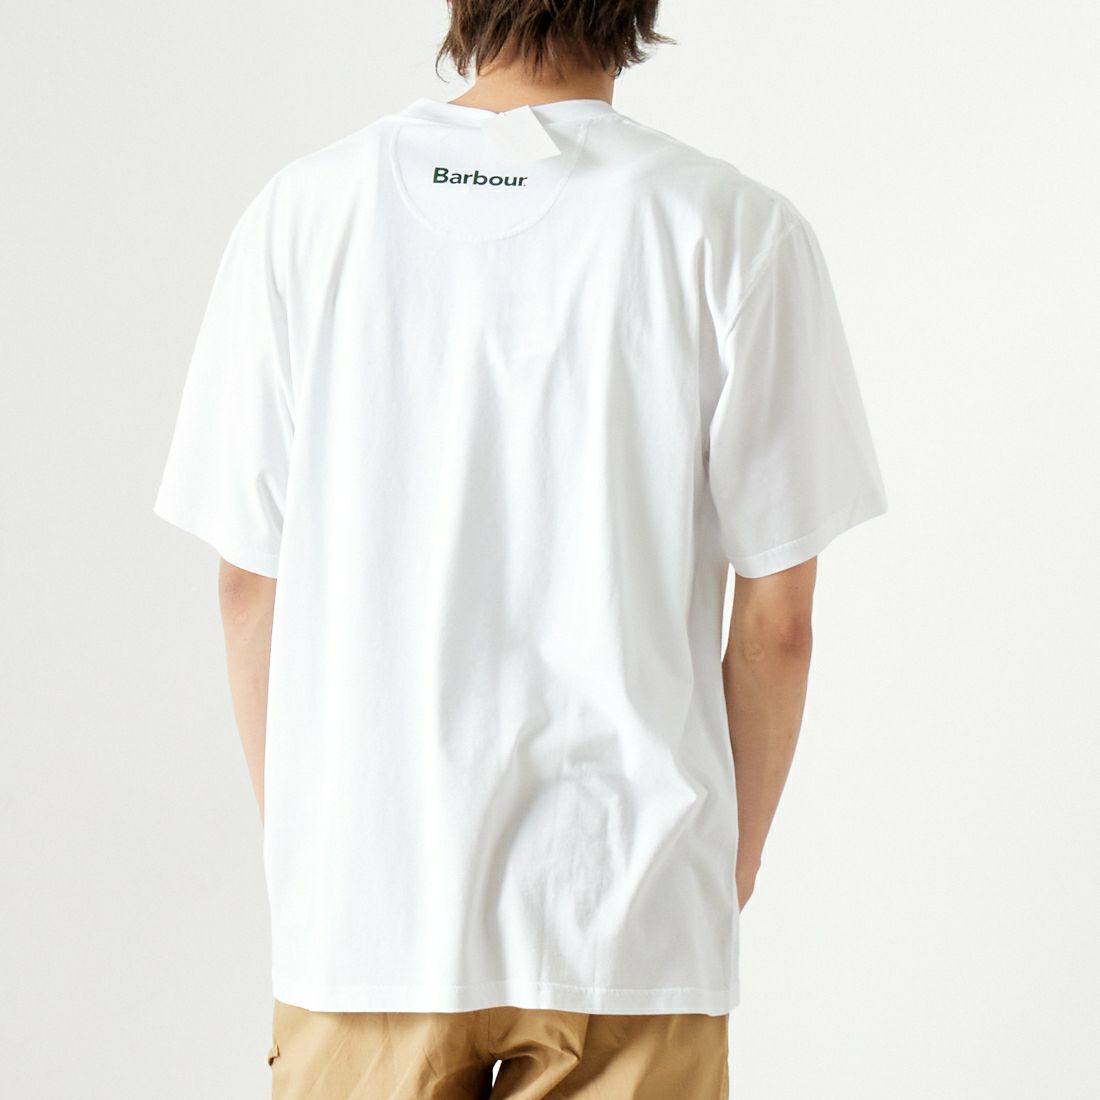 Barbour [バブアー] Grainger アーカイブ ロゴ リラックスフィット Tシャツ [MTS1259] WHITE